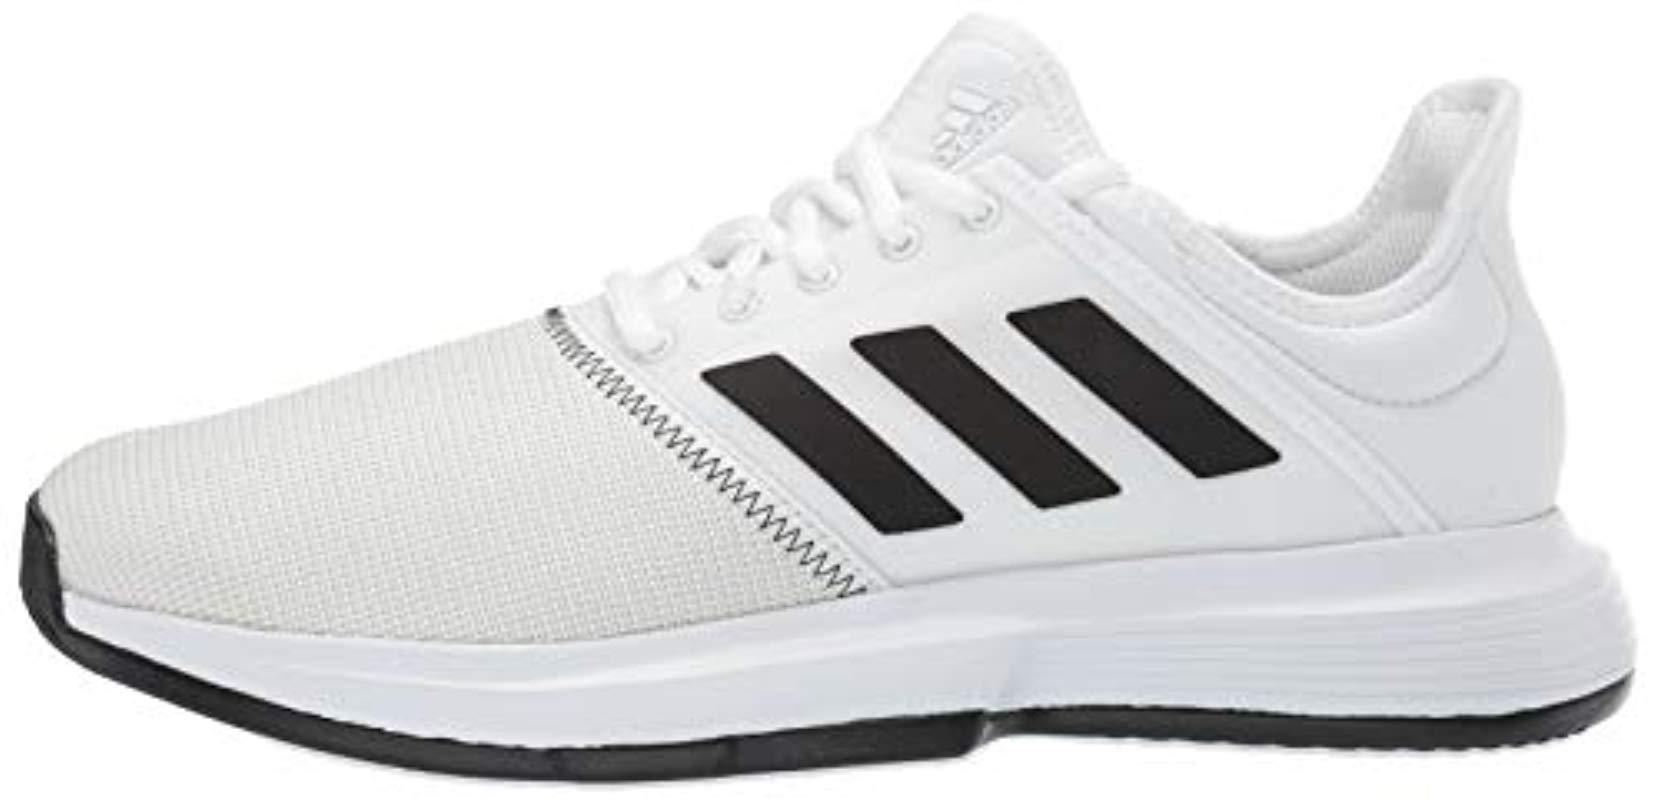 adidas xplorer white & black shoes